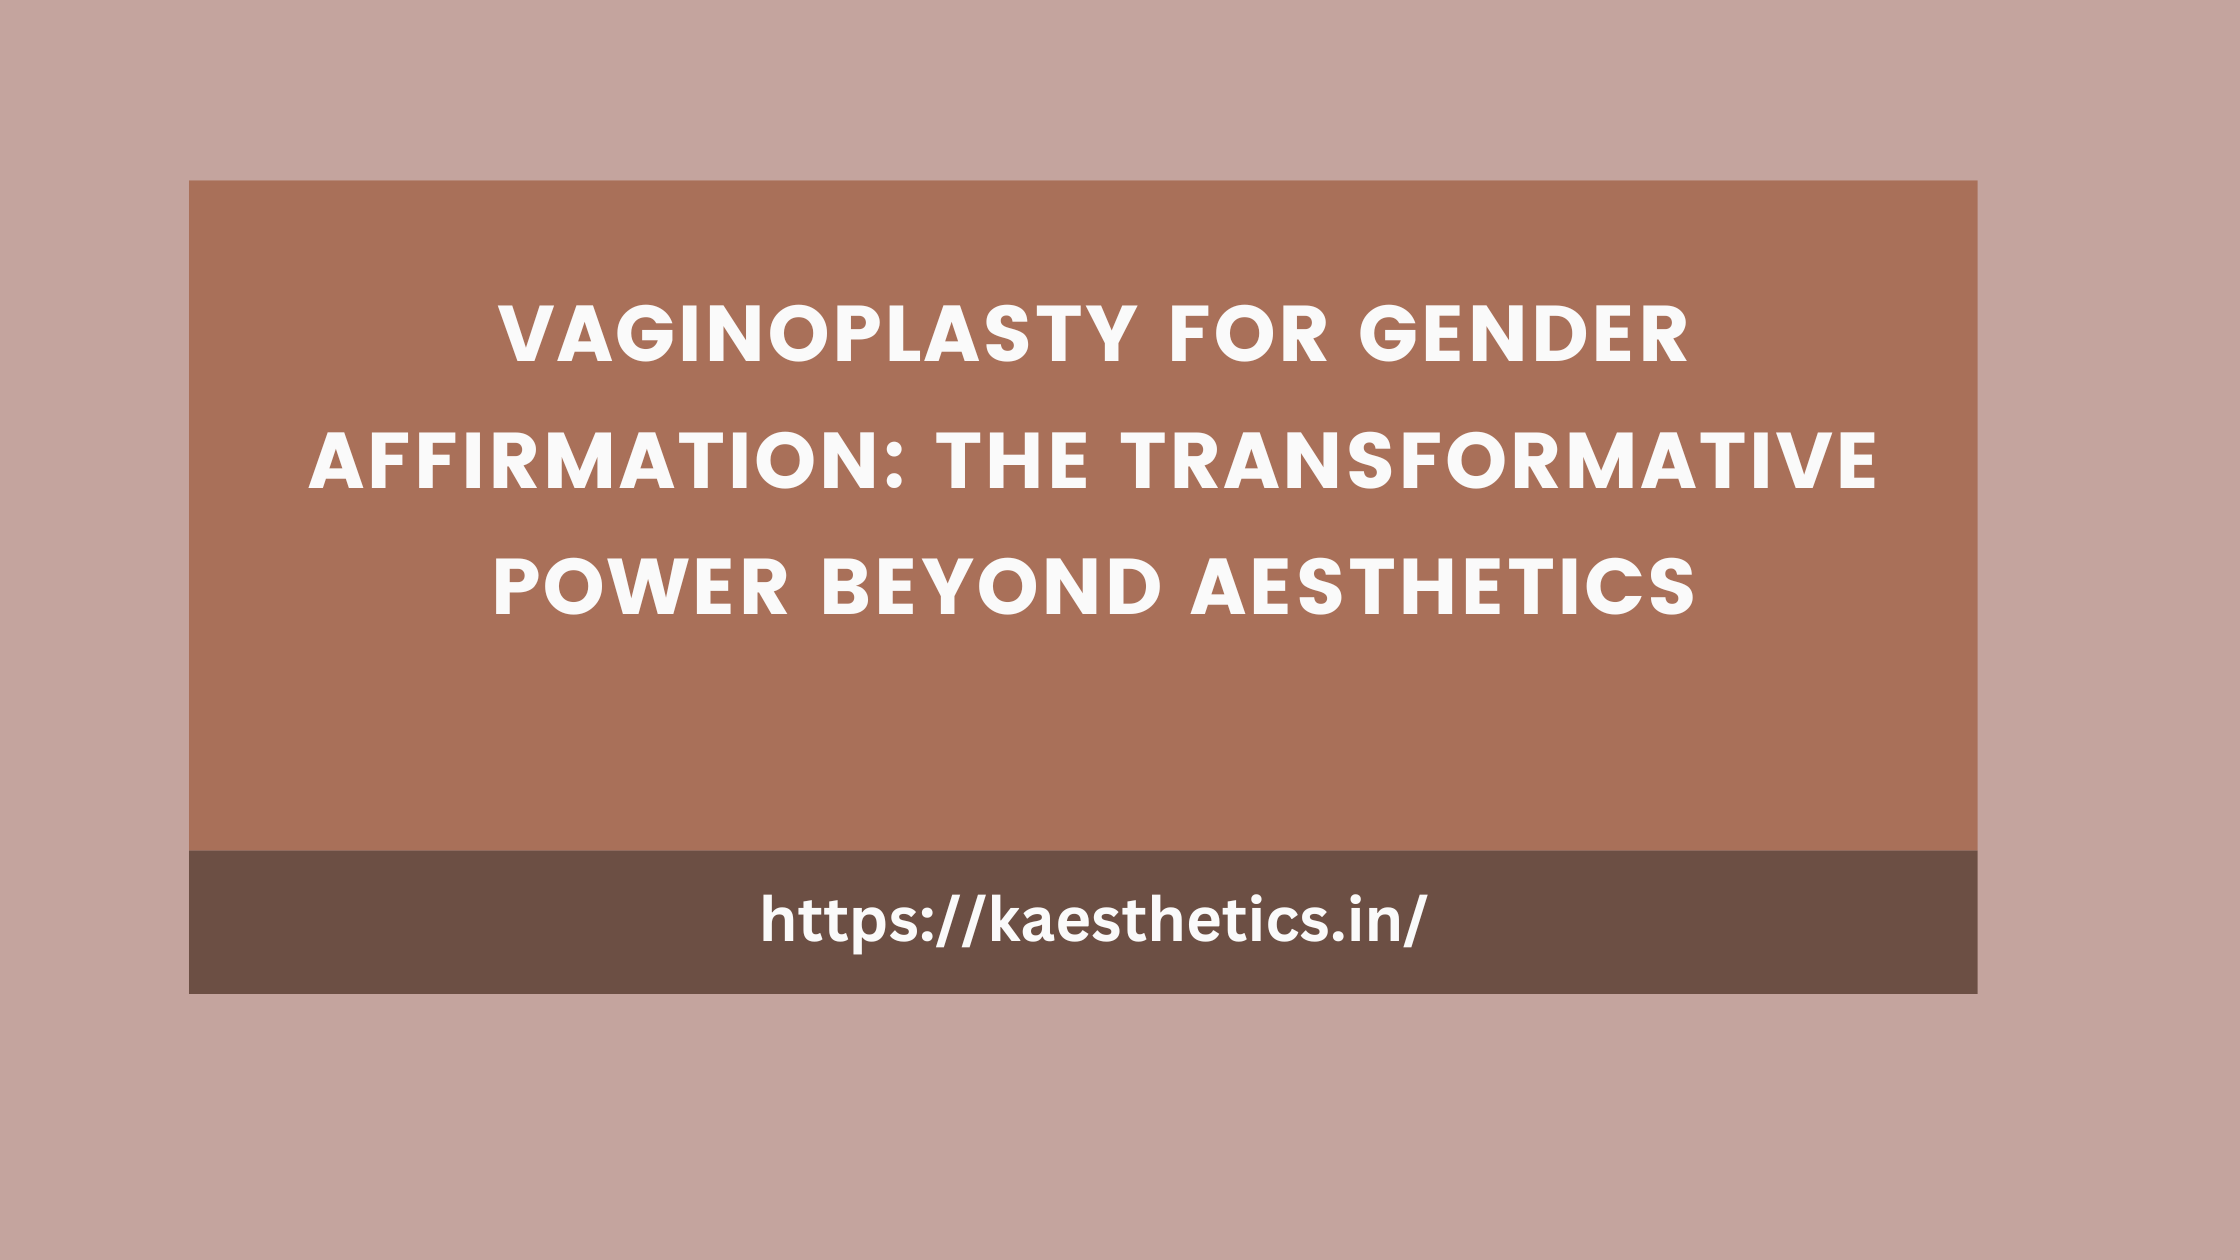 Vaginoplasty for gender affirmation: The transformative power beyond aesthetics